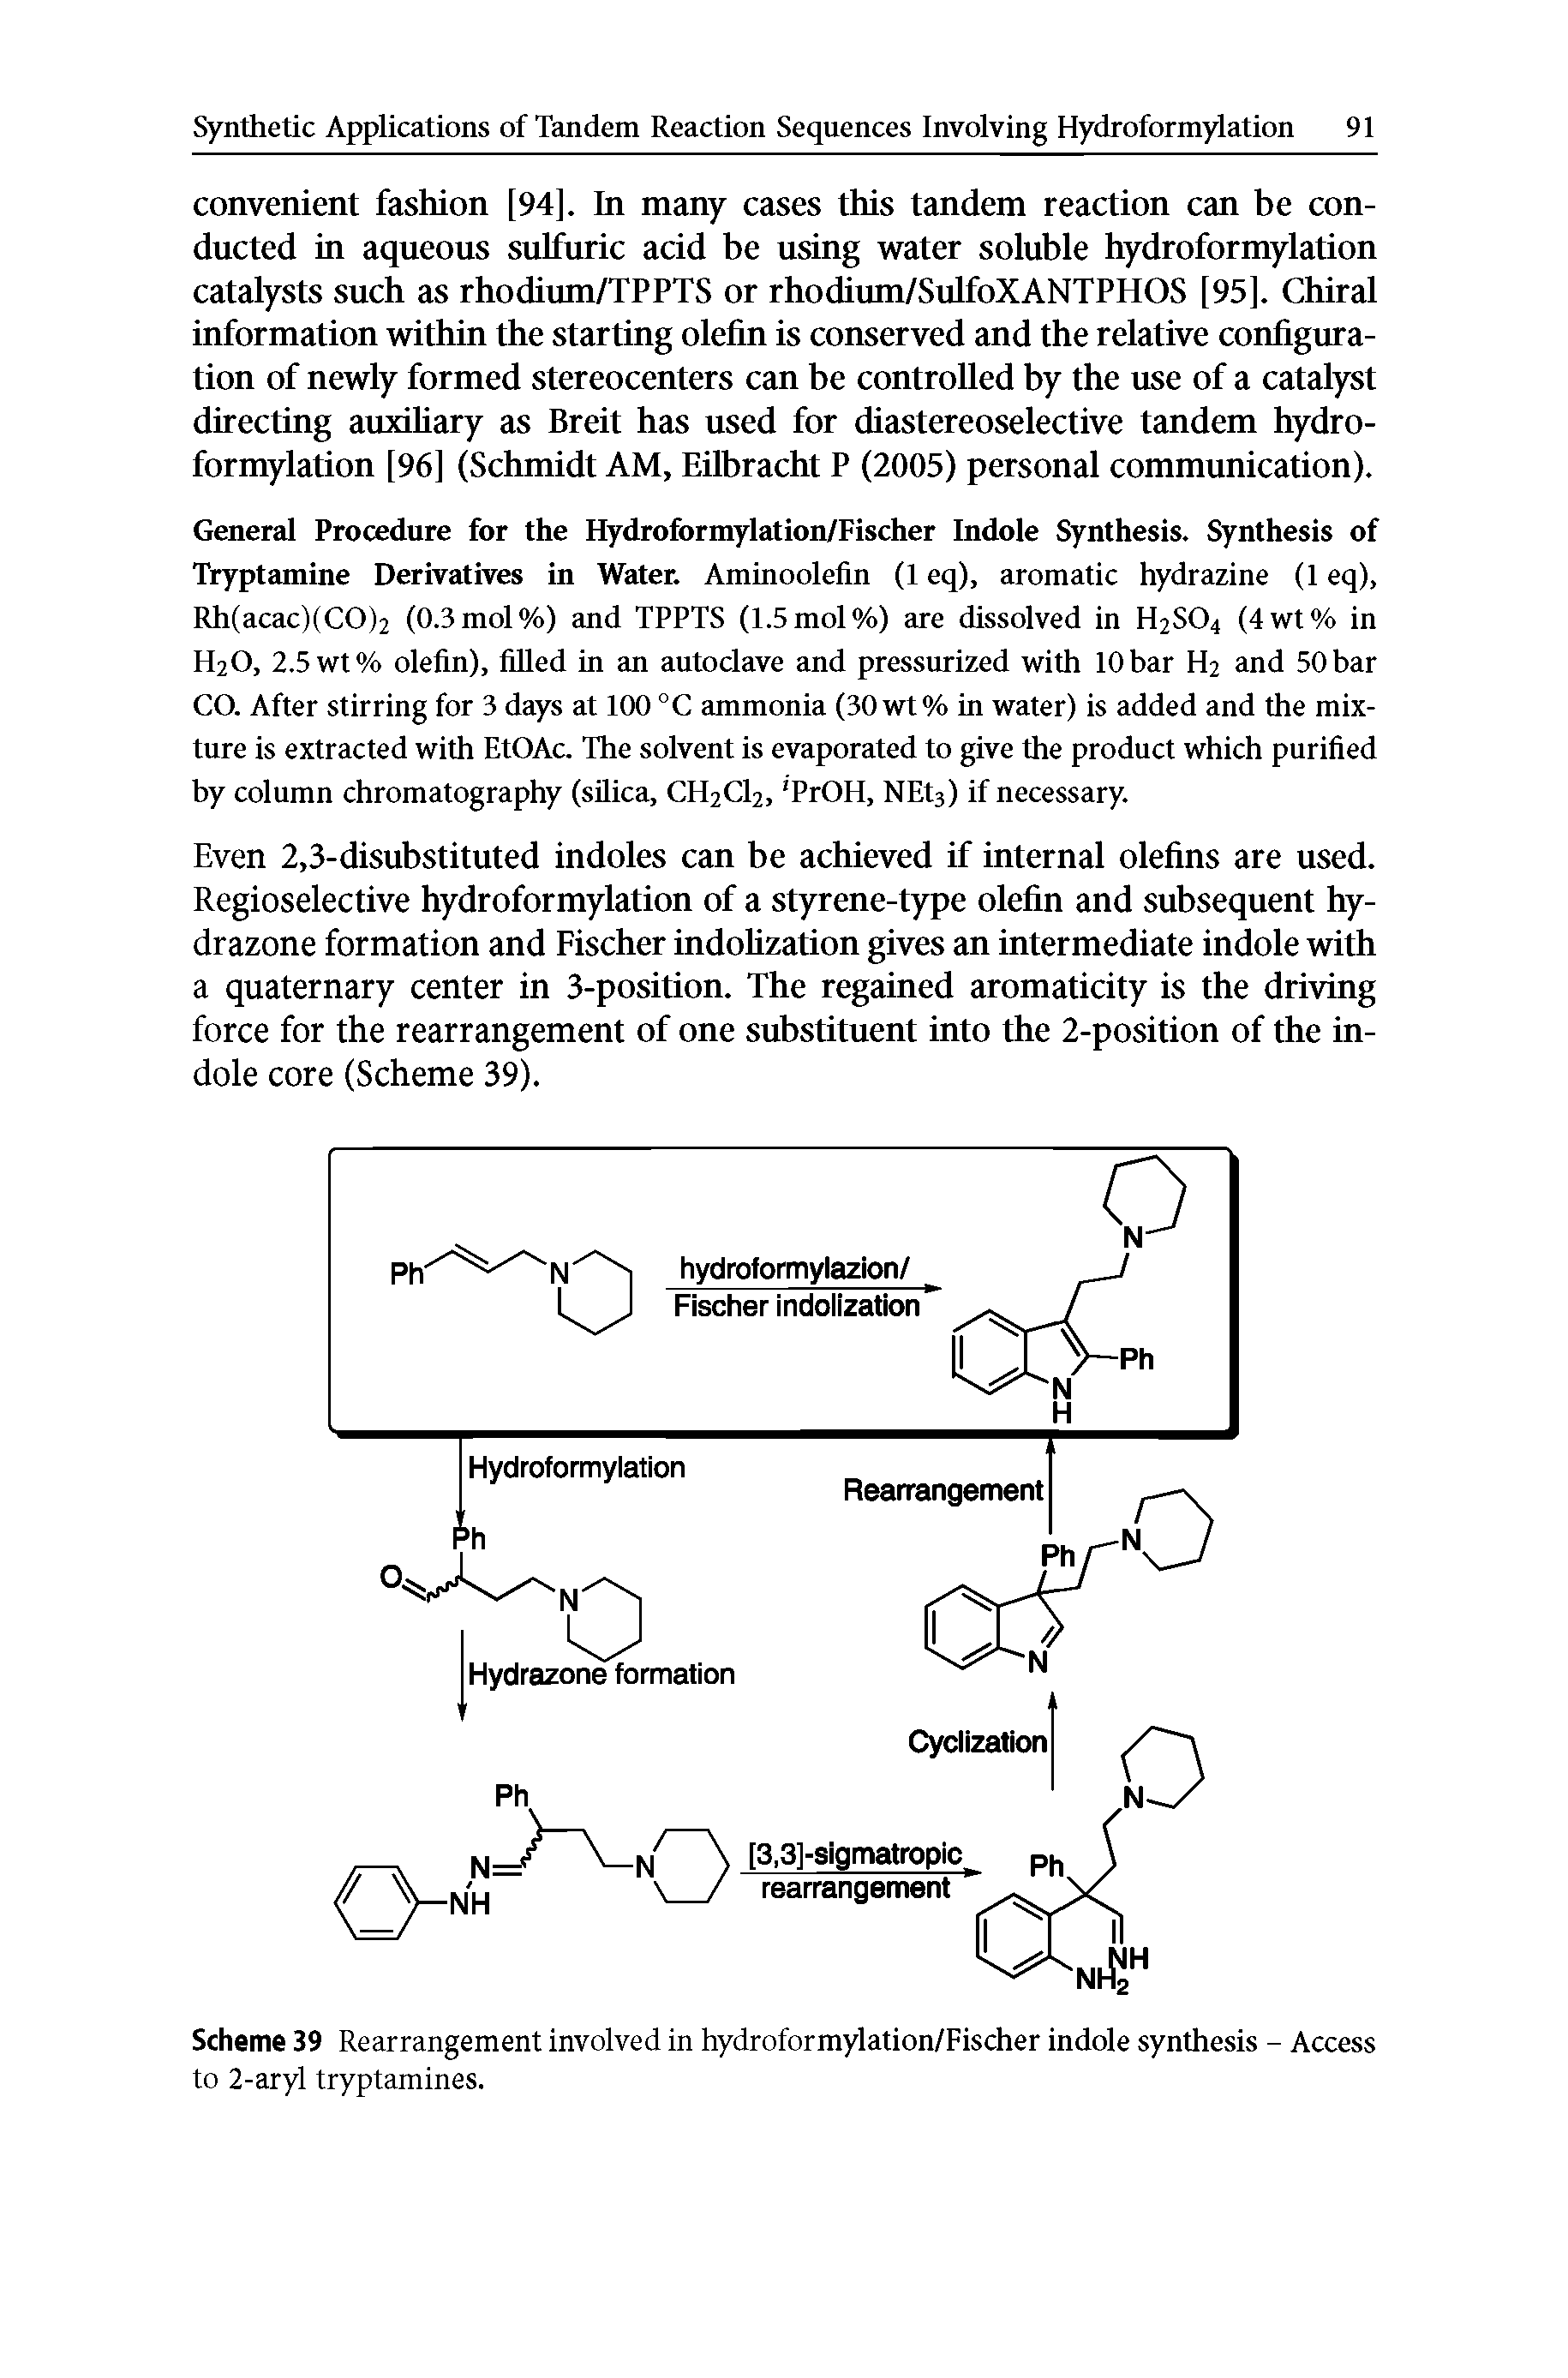 Scheme 39 Rearrangement involved in hydroformylation/Fischer indole synthesis - Access to 2-aryl tryptamines.